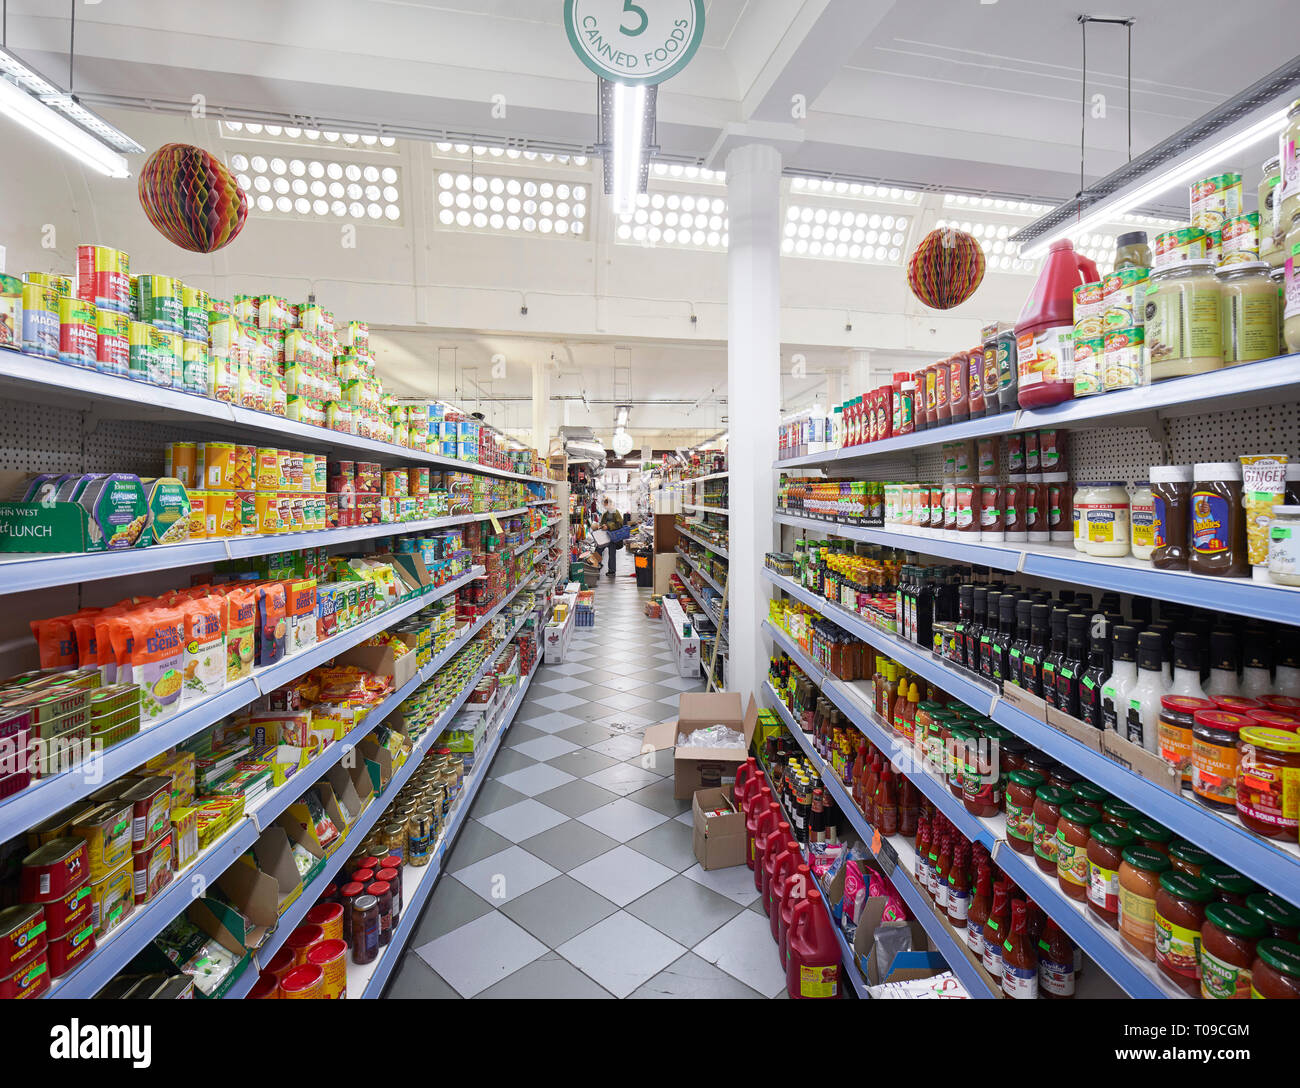 Supermarket aisle. Khan's Department Store Peckham, London, United Kingdom. Architect: Benedict OLooney Arch, 1935. Stock Photo